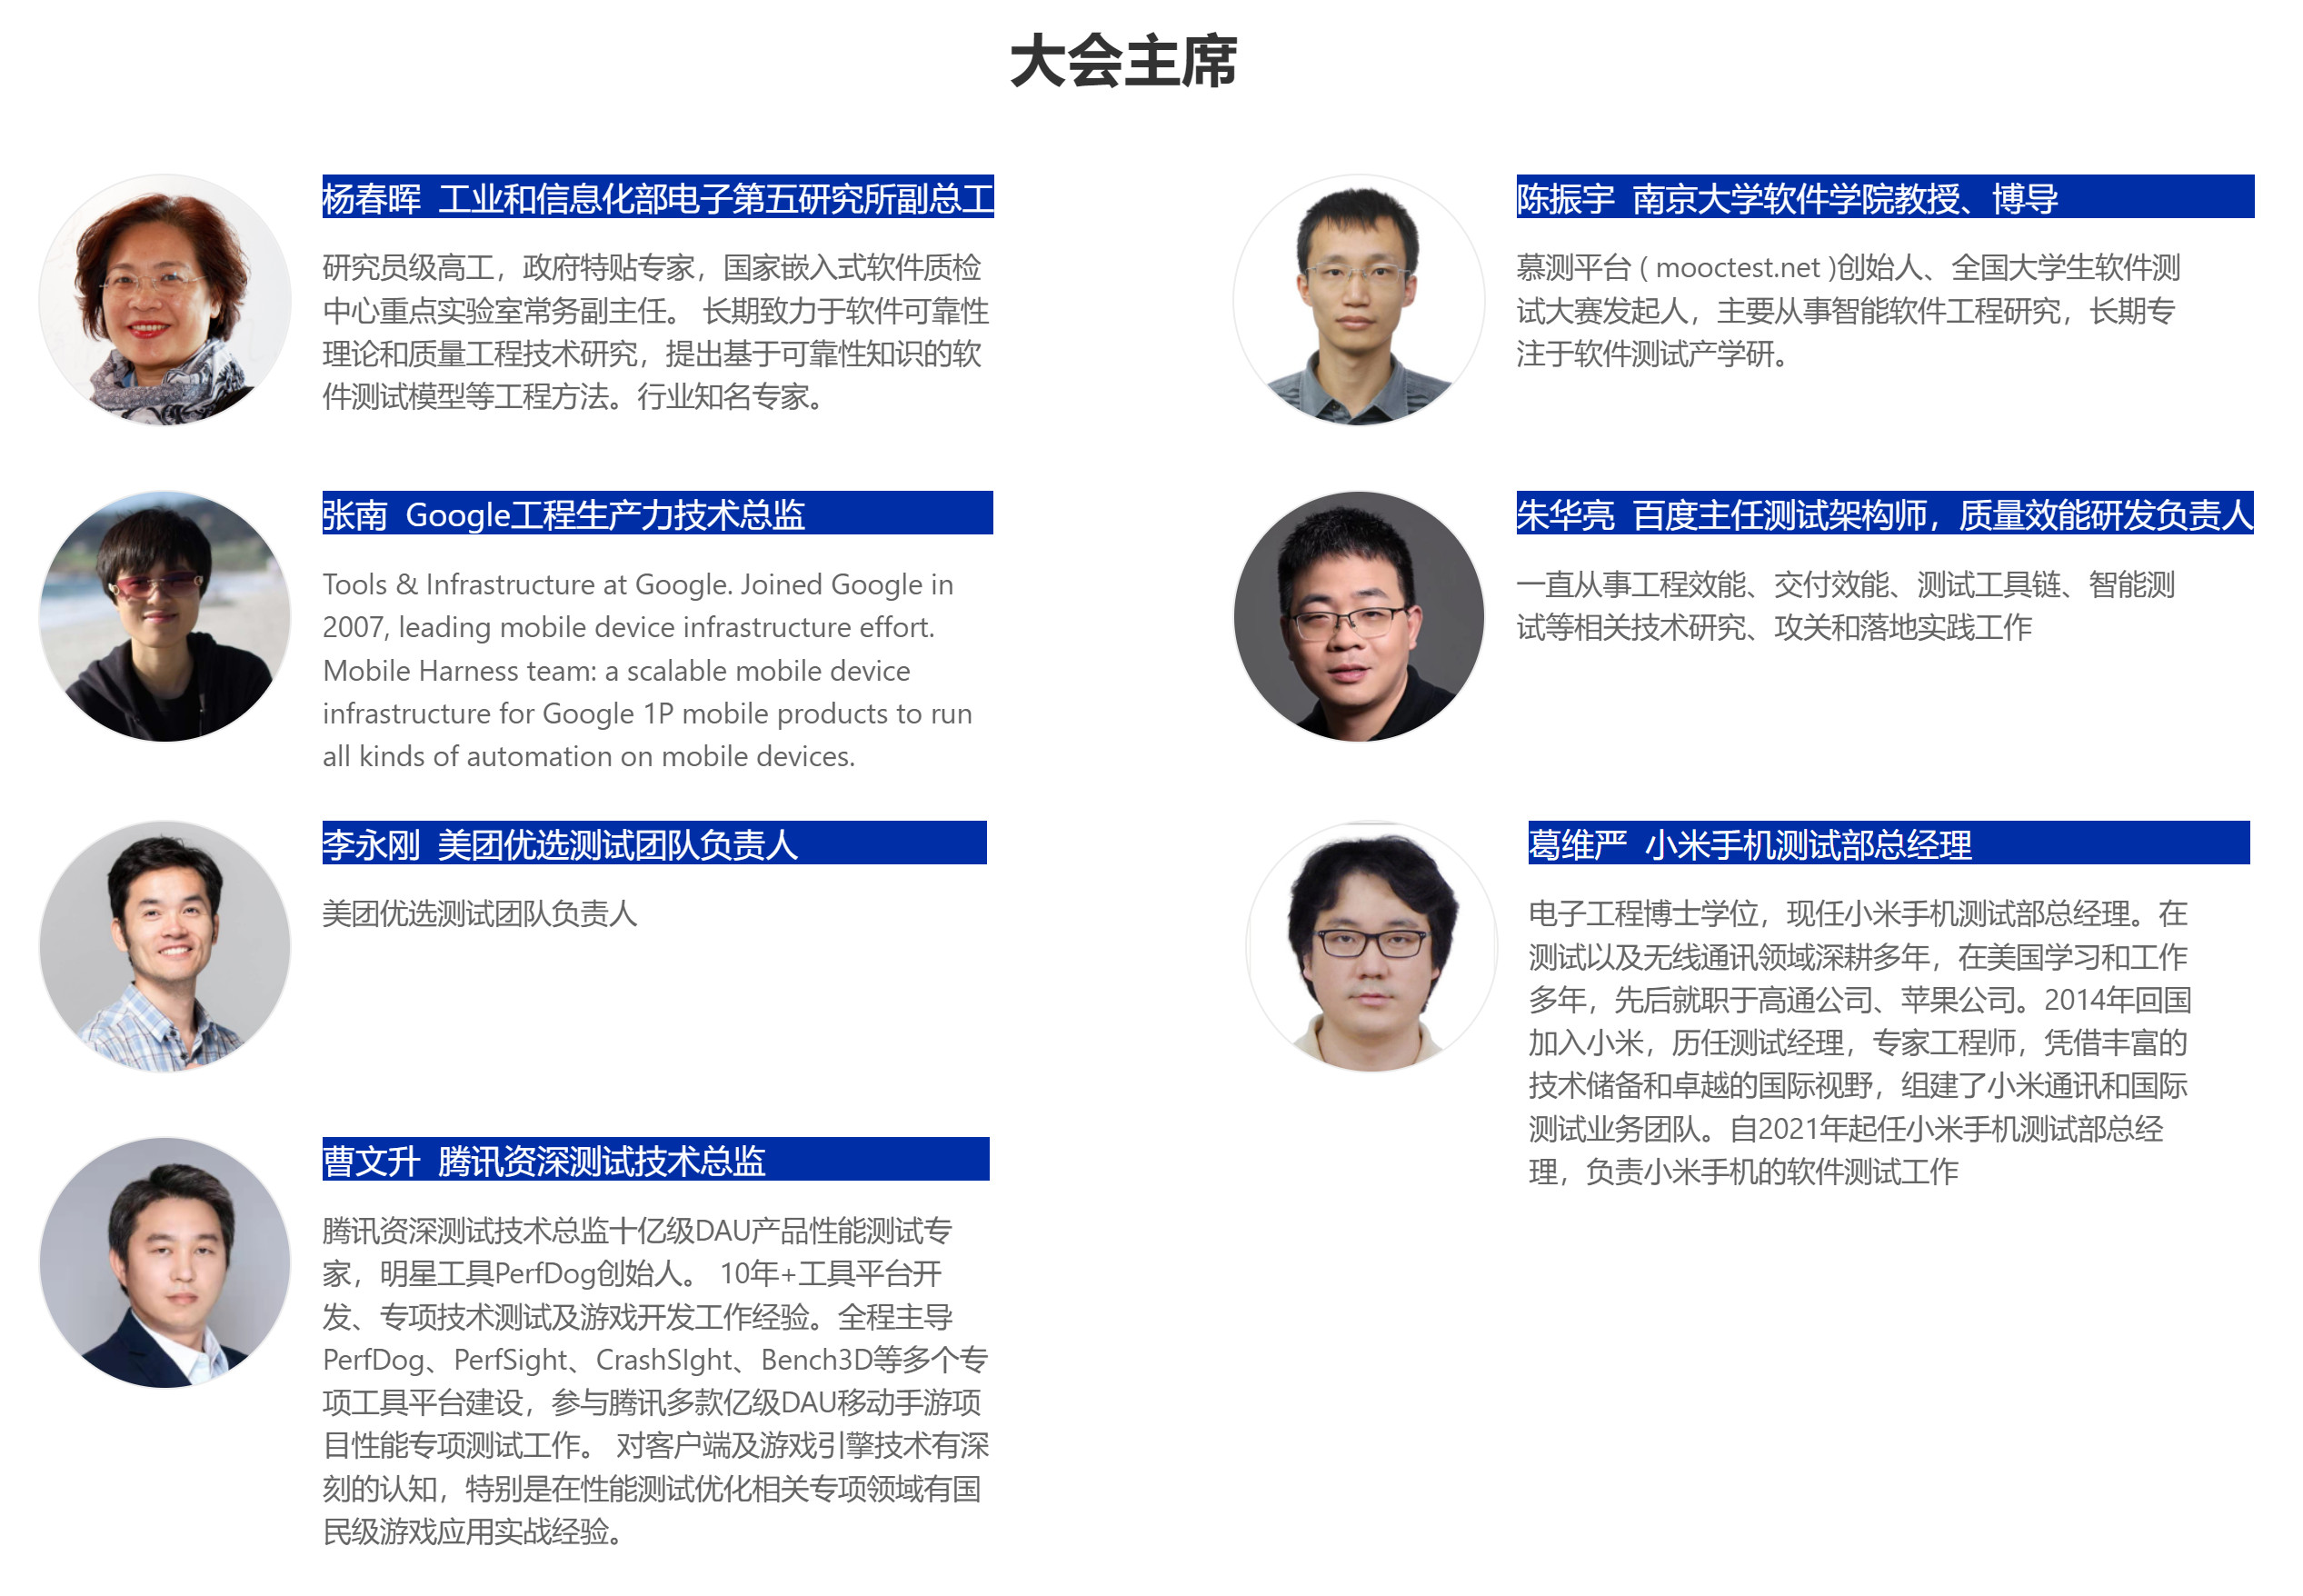 MTSC2022中国互联网测试开发大会-深圳站